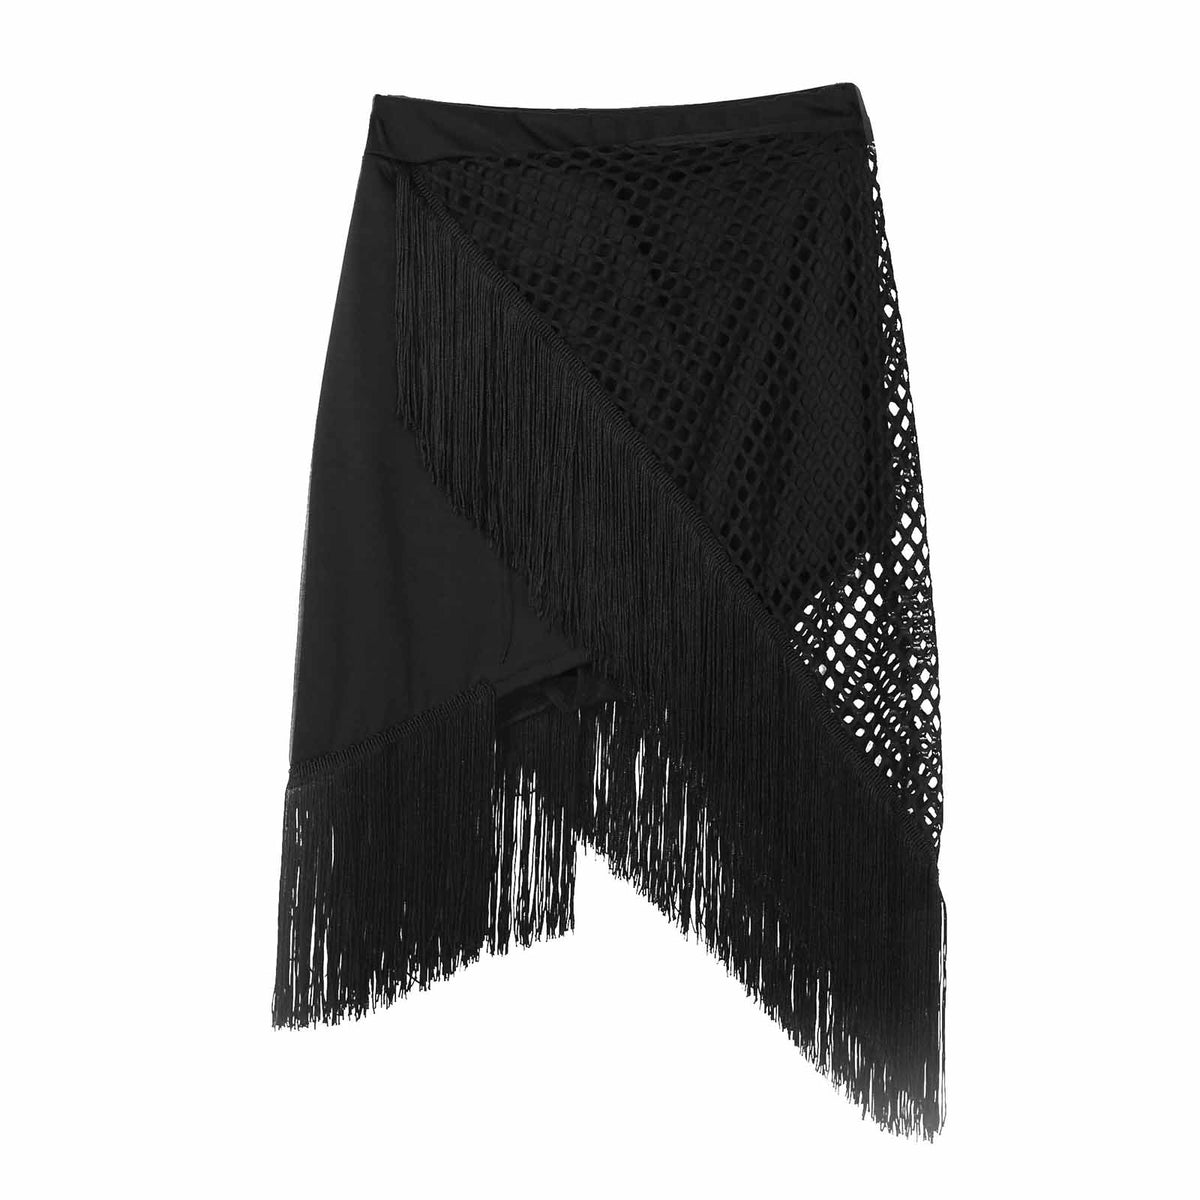 Rags n Rituals 'Temptress' Black fringe tassle fishnet skirt at $34.99 USD